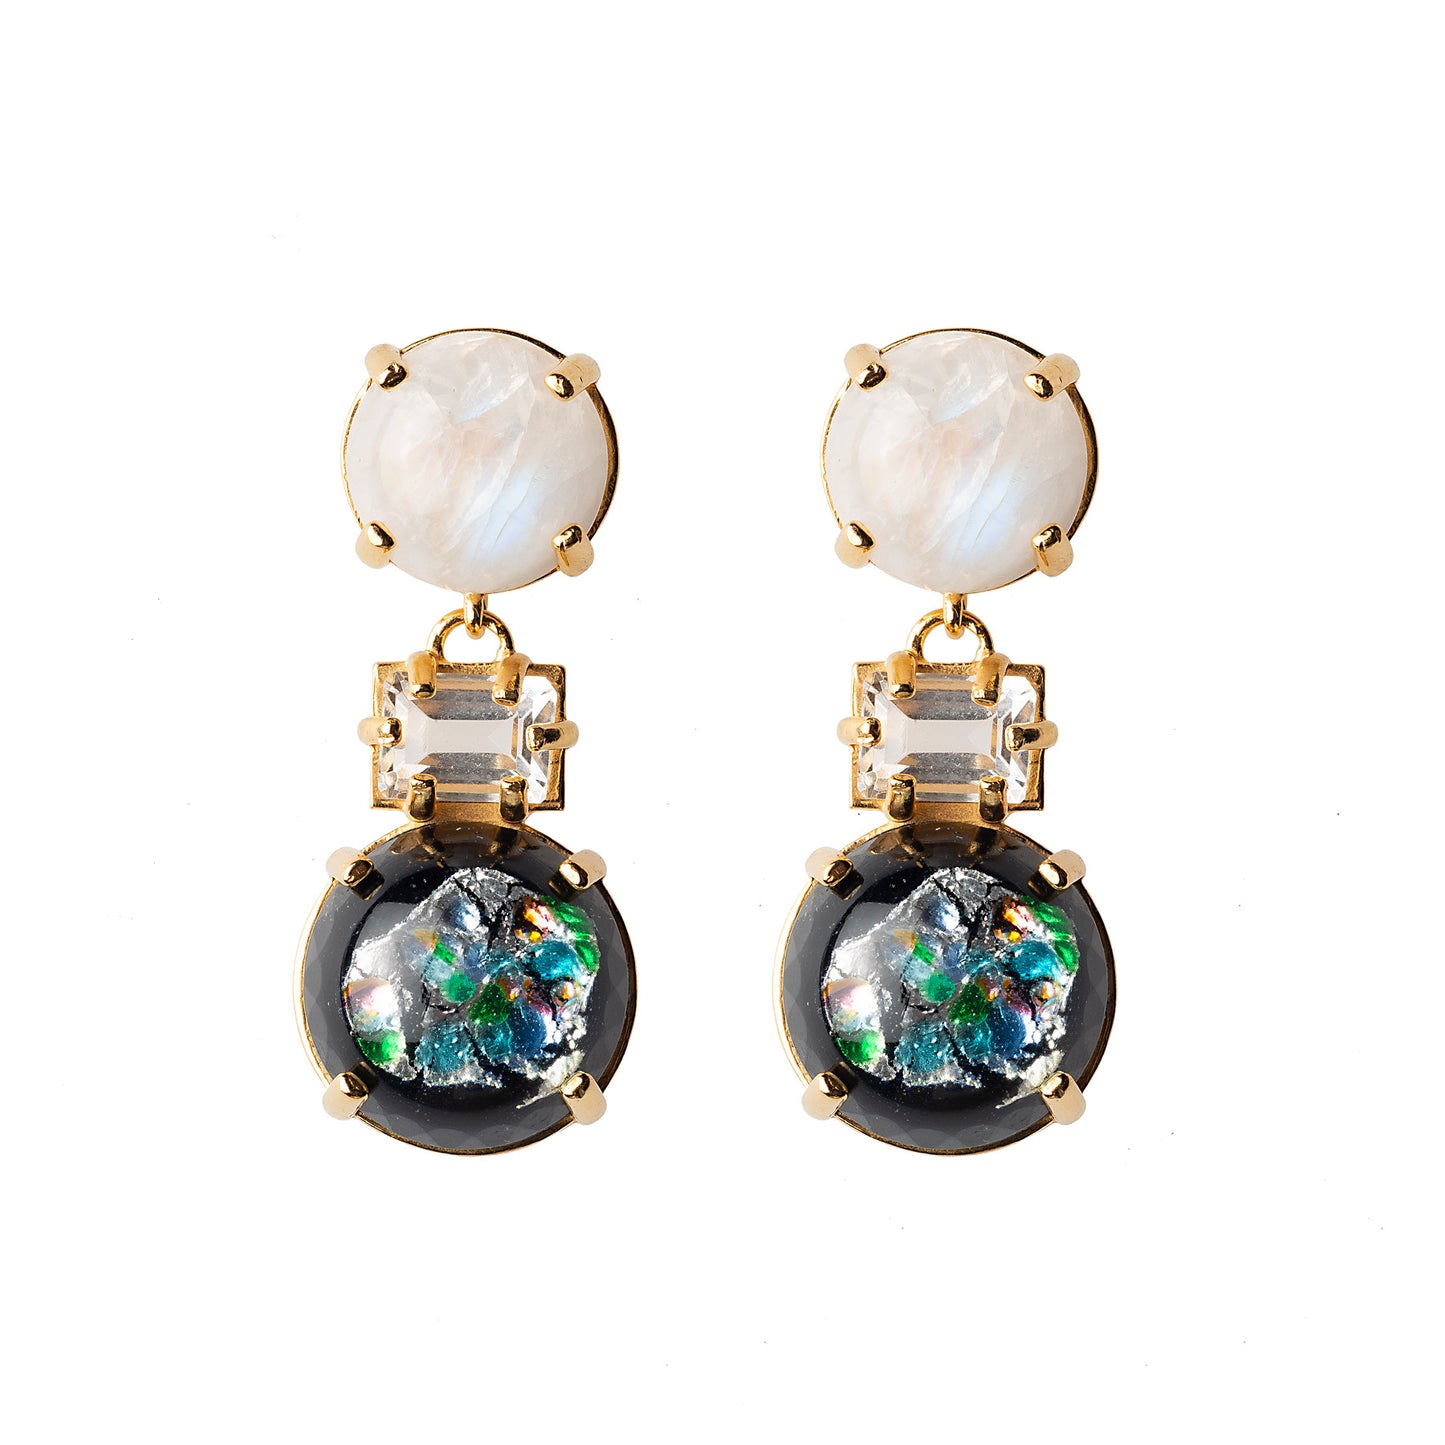 Moonstone, Rock Crystal & Vintage Glass Opal Earrings